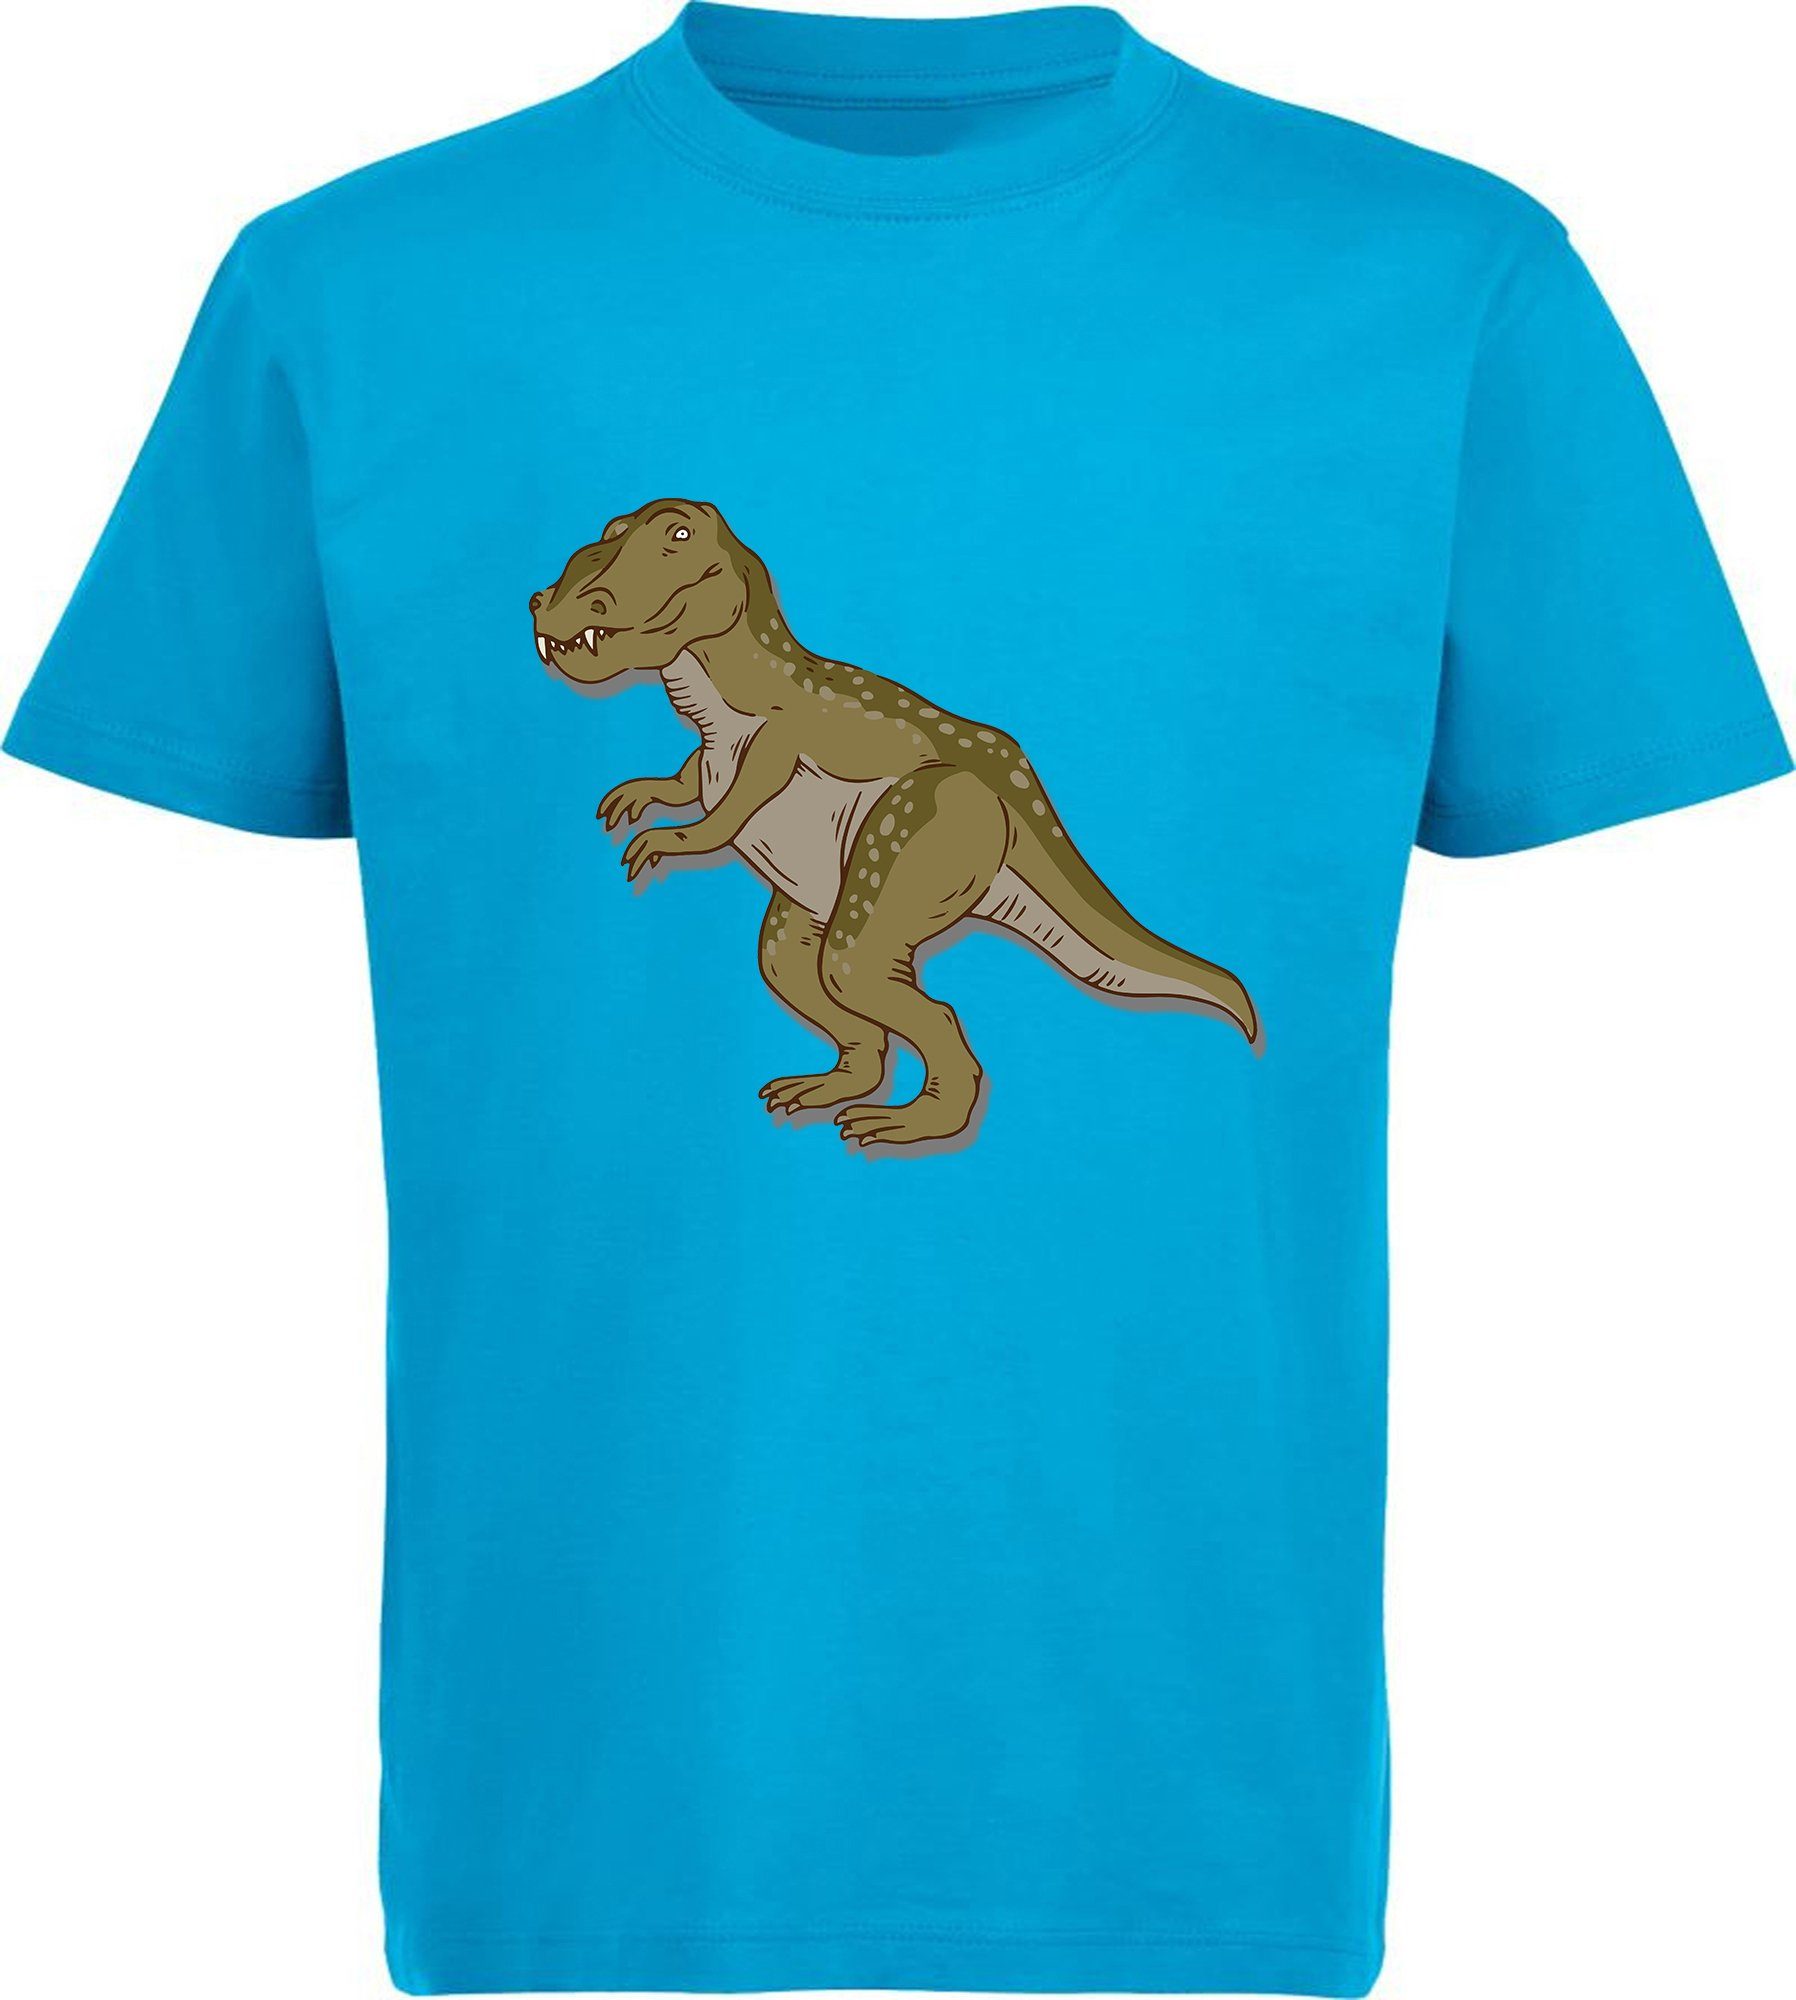 MyDesign24 Print-Shirt bedrucktes Kinder T-Shirt mit Tyrannosaurus Rex Baumwollshirt mit Dino, schwarz, weiß, rot, blau, i69 aqua blau